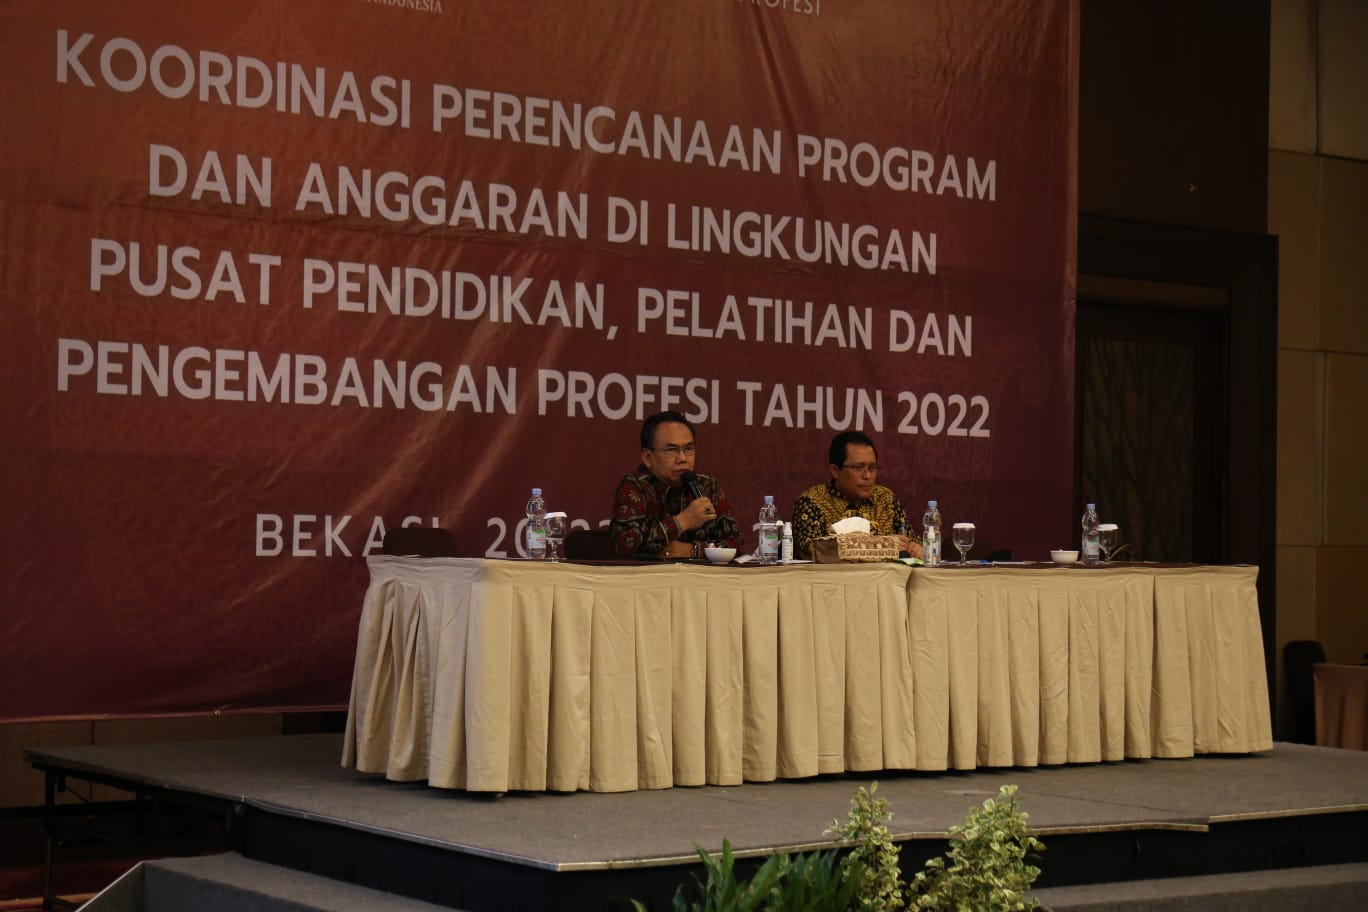 Koordinasi Perencanaan Program dan Anggaran Pusdiklatbangprof 2022